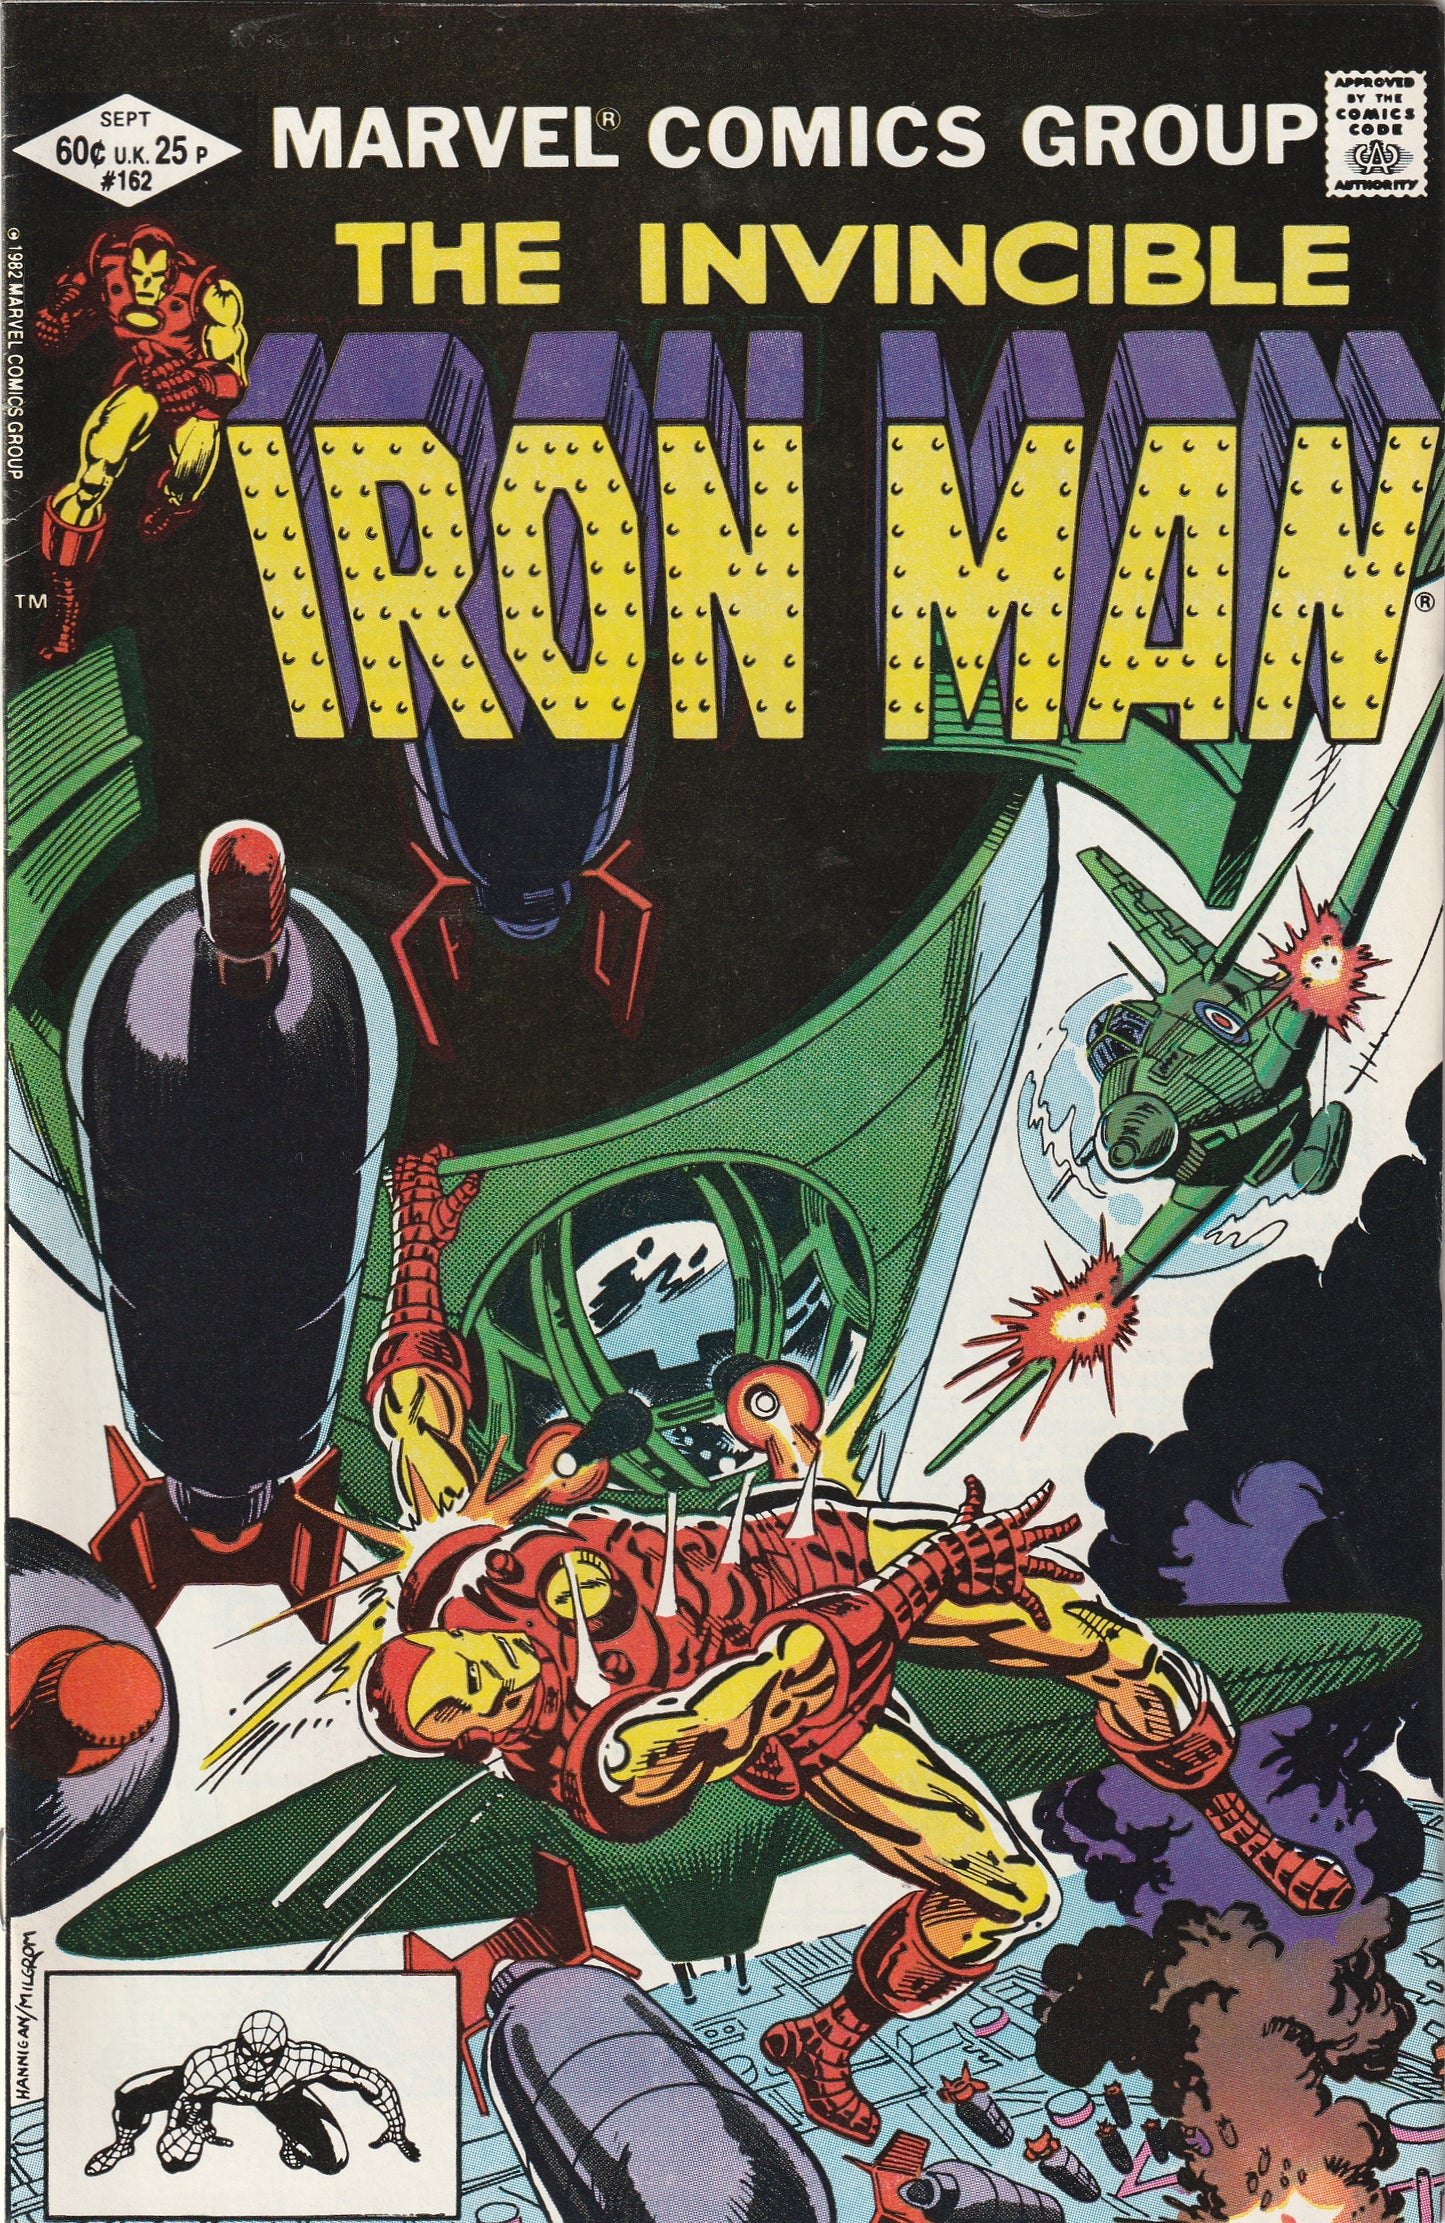 Iron Man #162 (1982)